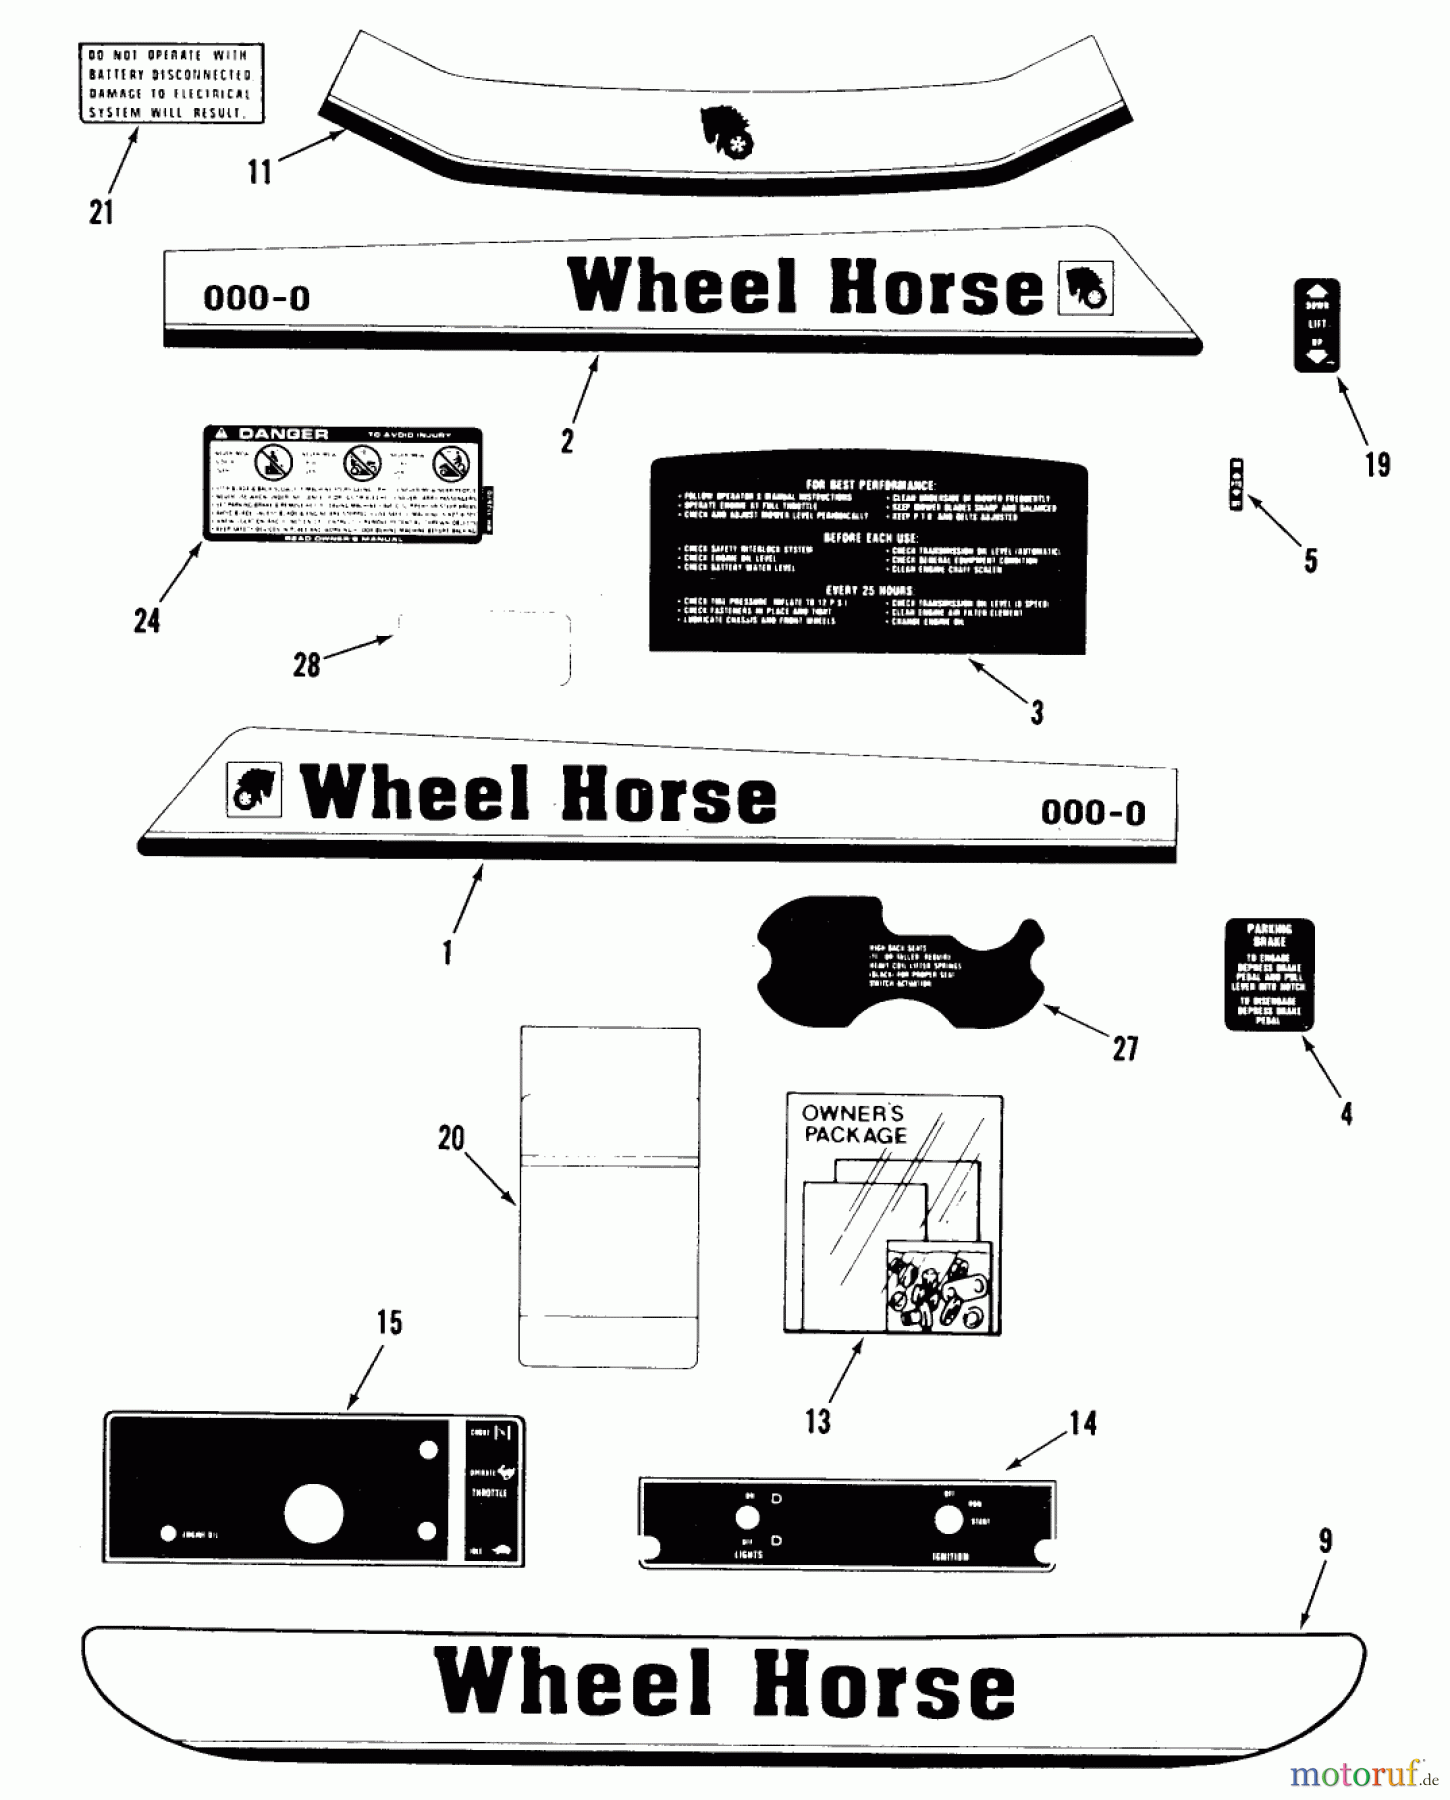  Toro Neu Mowers, Lawn & Garden Tractor Seite 2 E2-17K501 (227-5) - Toro 227-5 Tractor, 1988 DECALS, MISCELLANEOUS